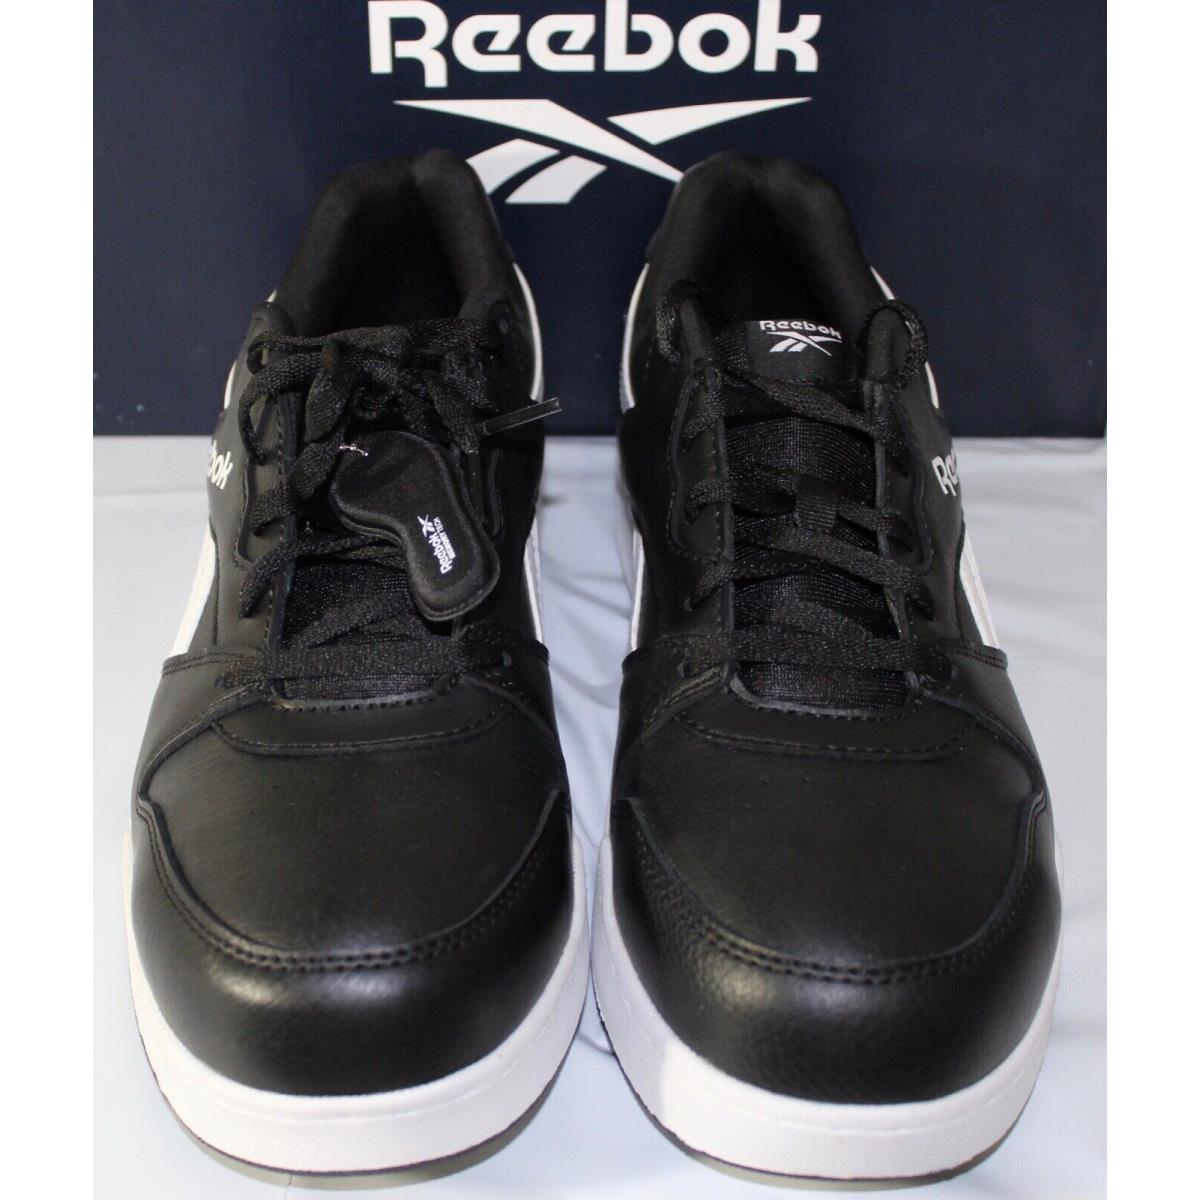 Reebok shoes WORK SNEAKER - Black/White 2